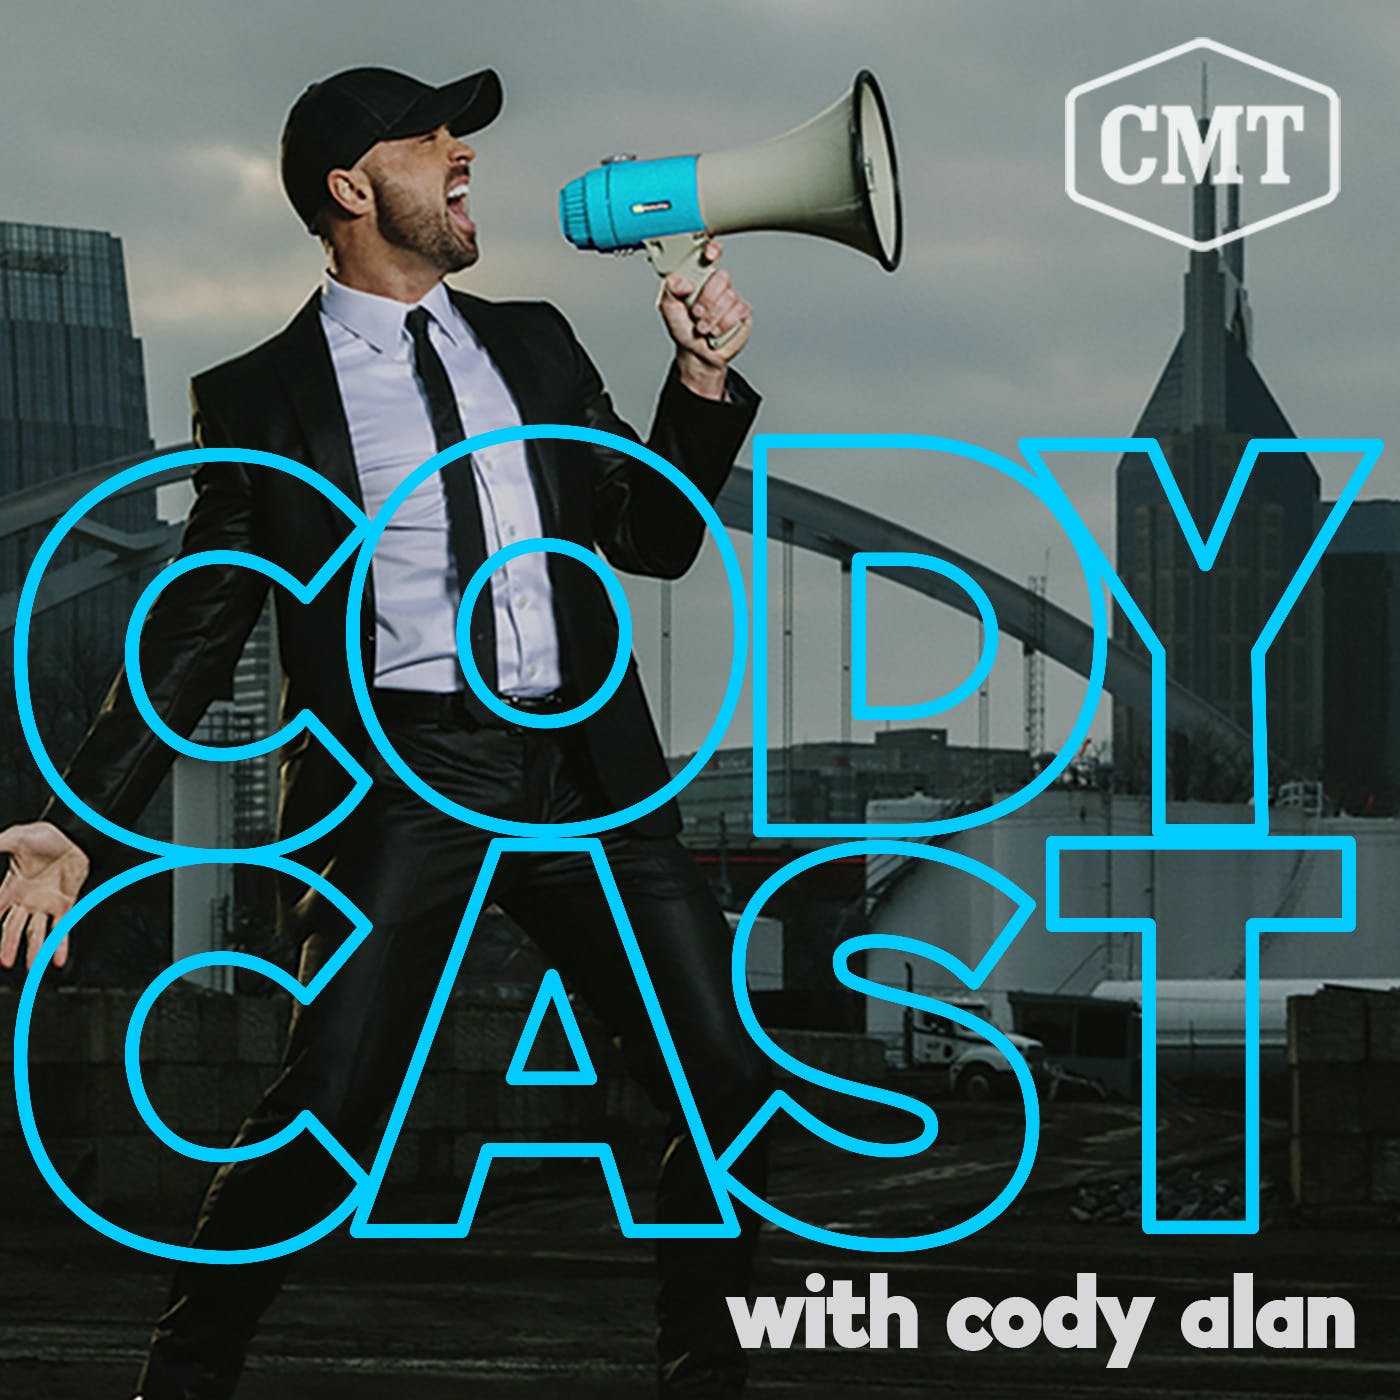 Cody Cast with Cody Alan